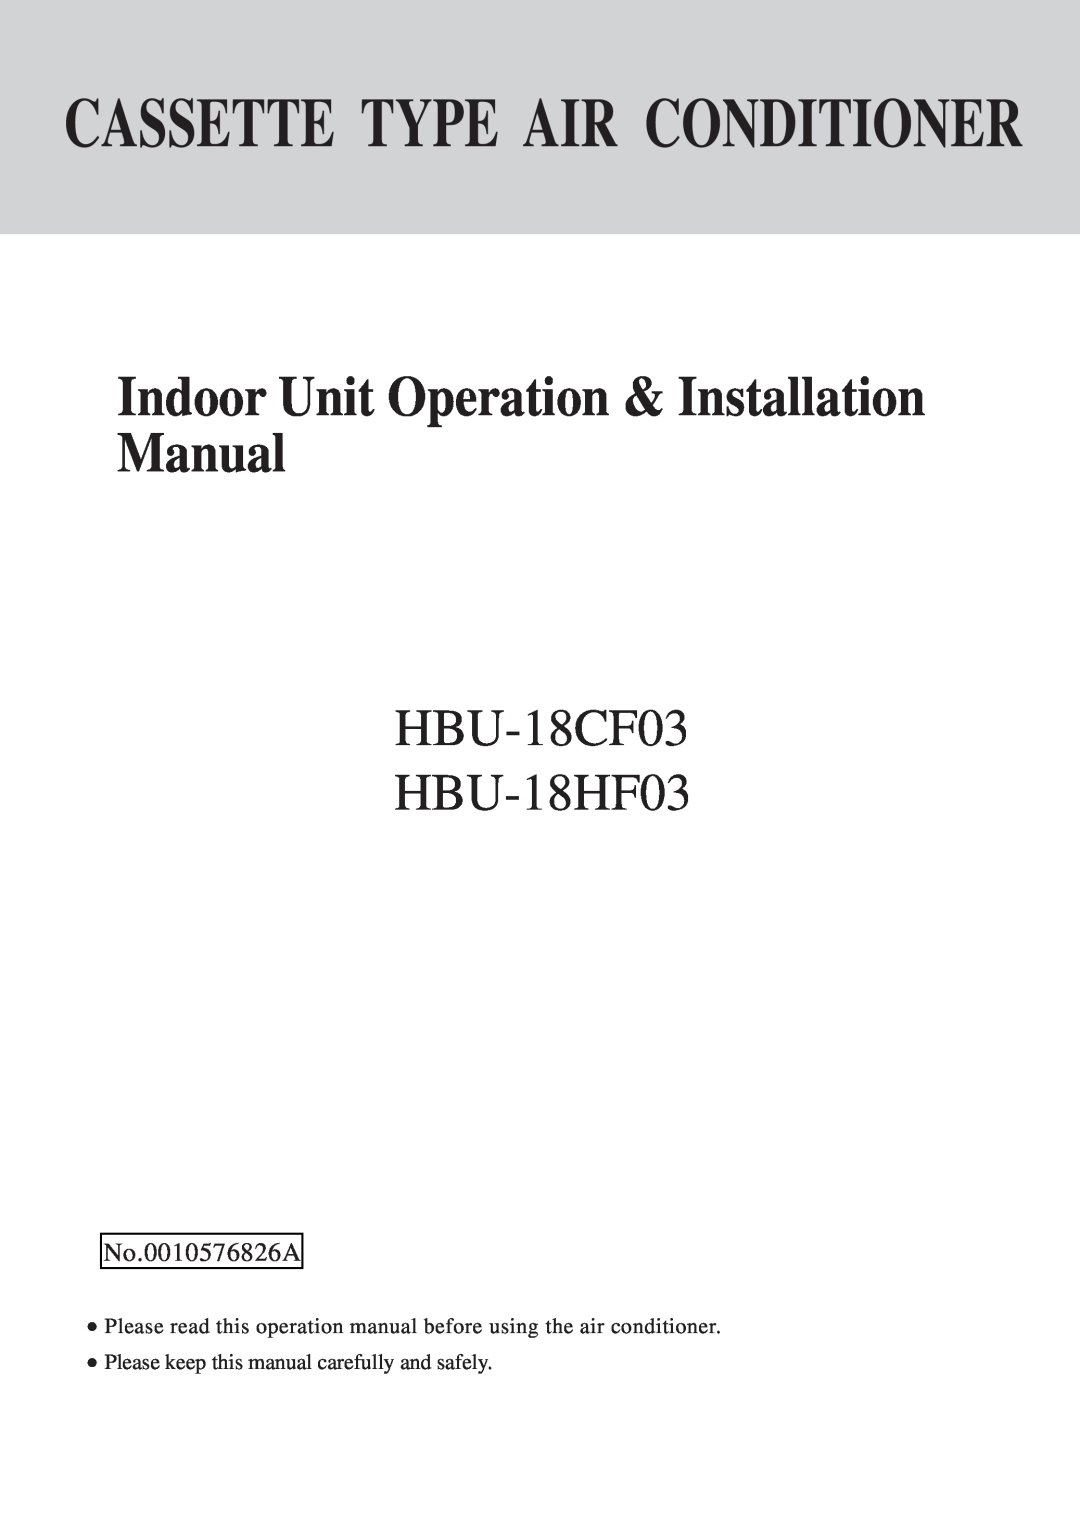 Haier HBU-18CF03 installation manual No. B, Cassette Type Air Conditioner, Operation & Installation Manual Indoor Unit 